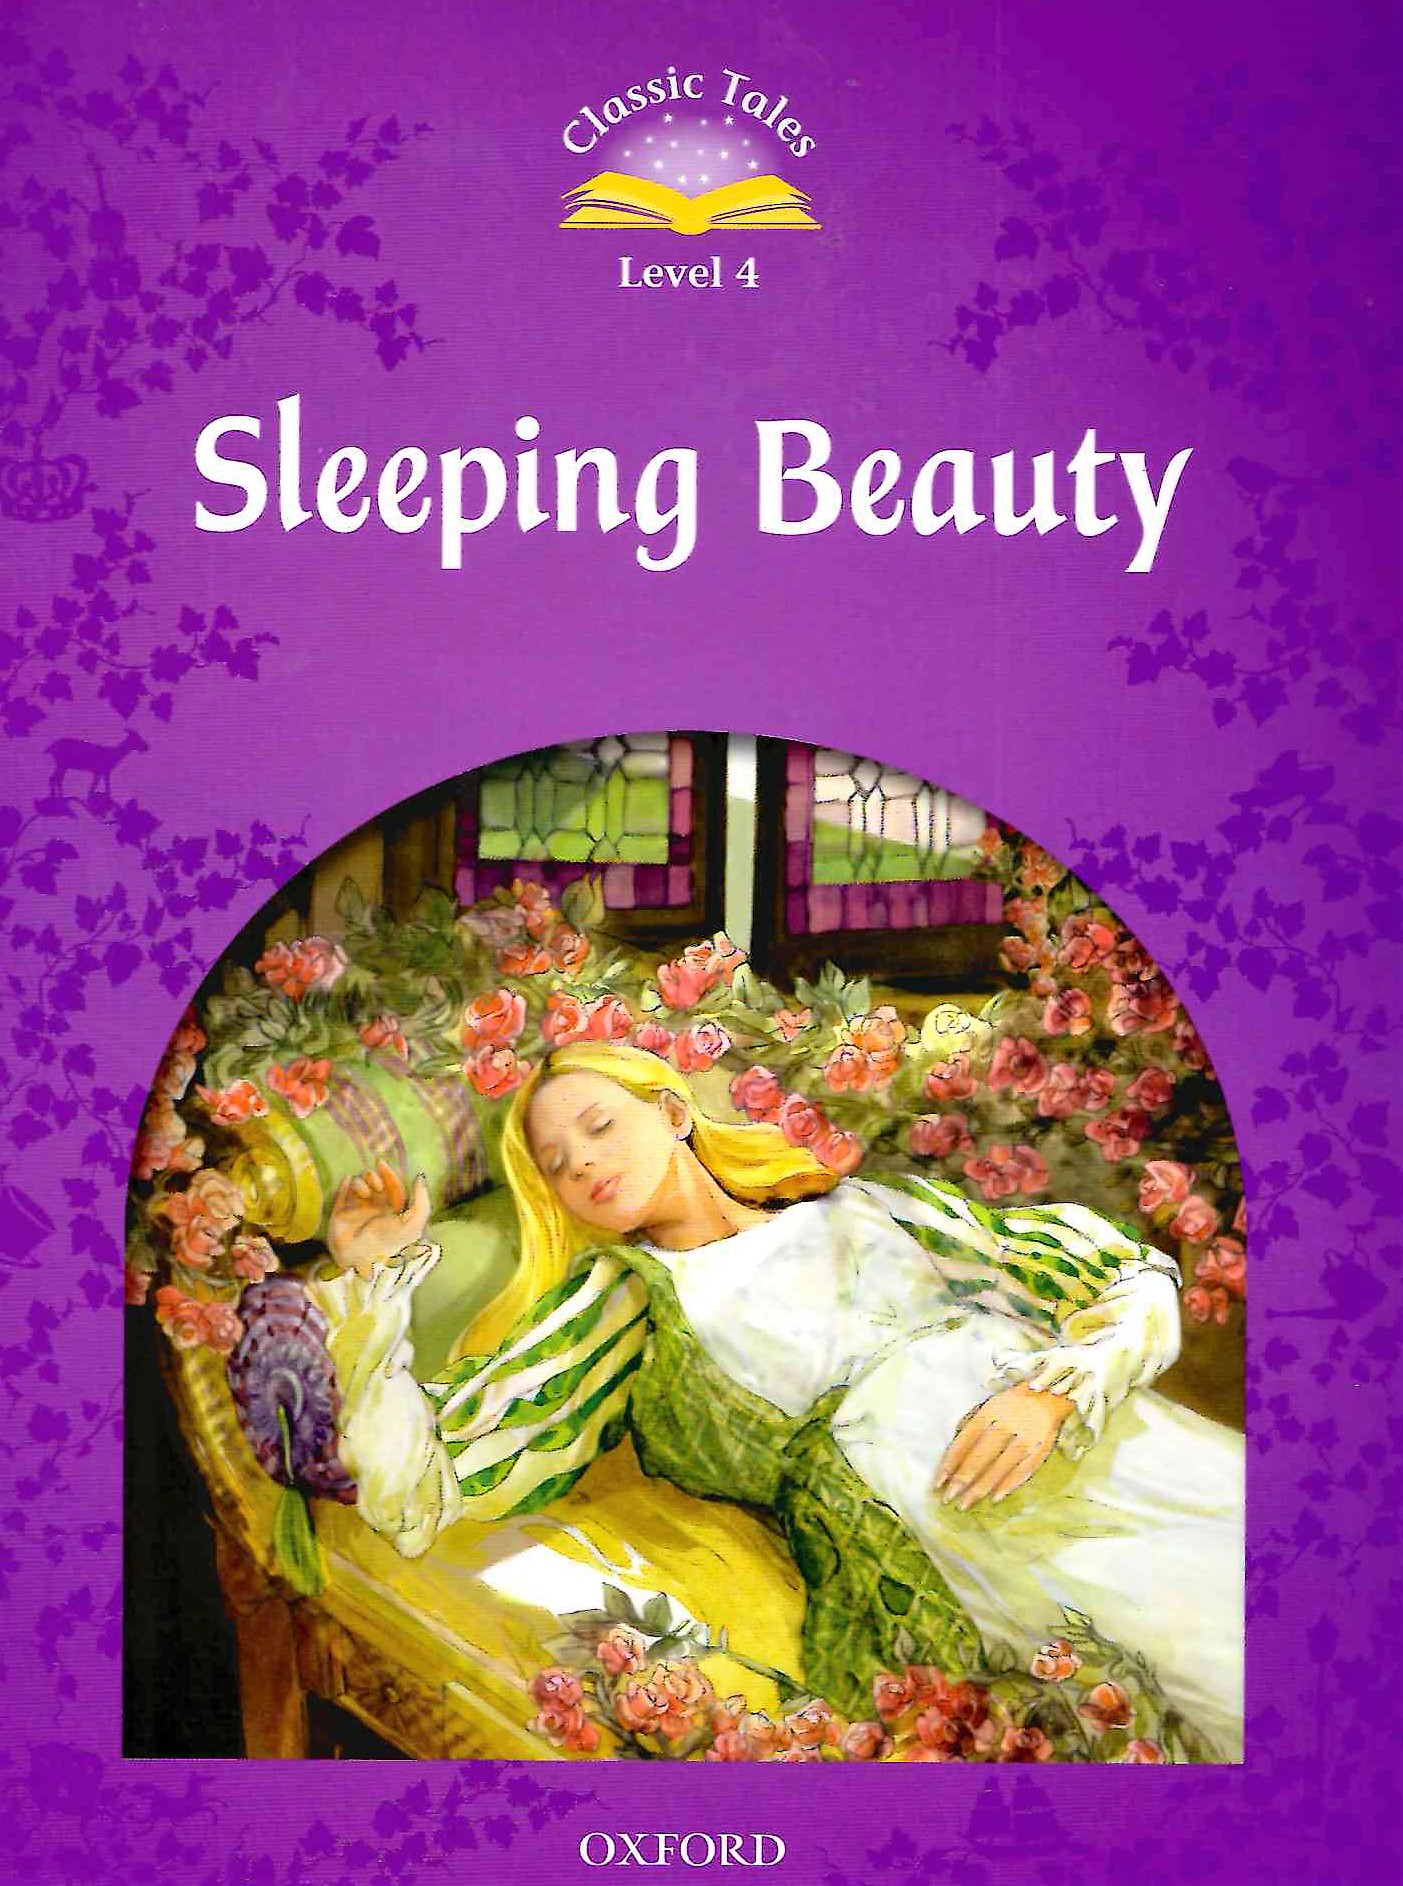 Oxford Classic Tales: Sleeping Beauty